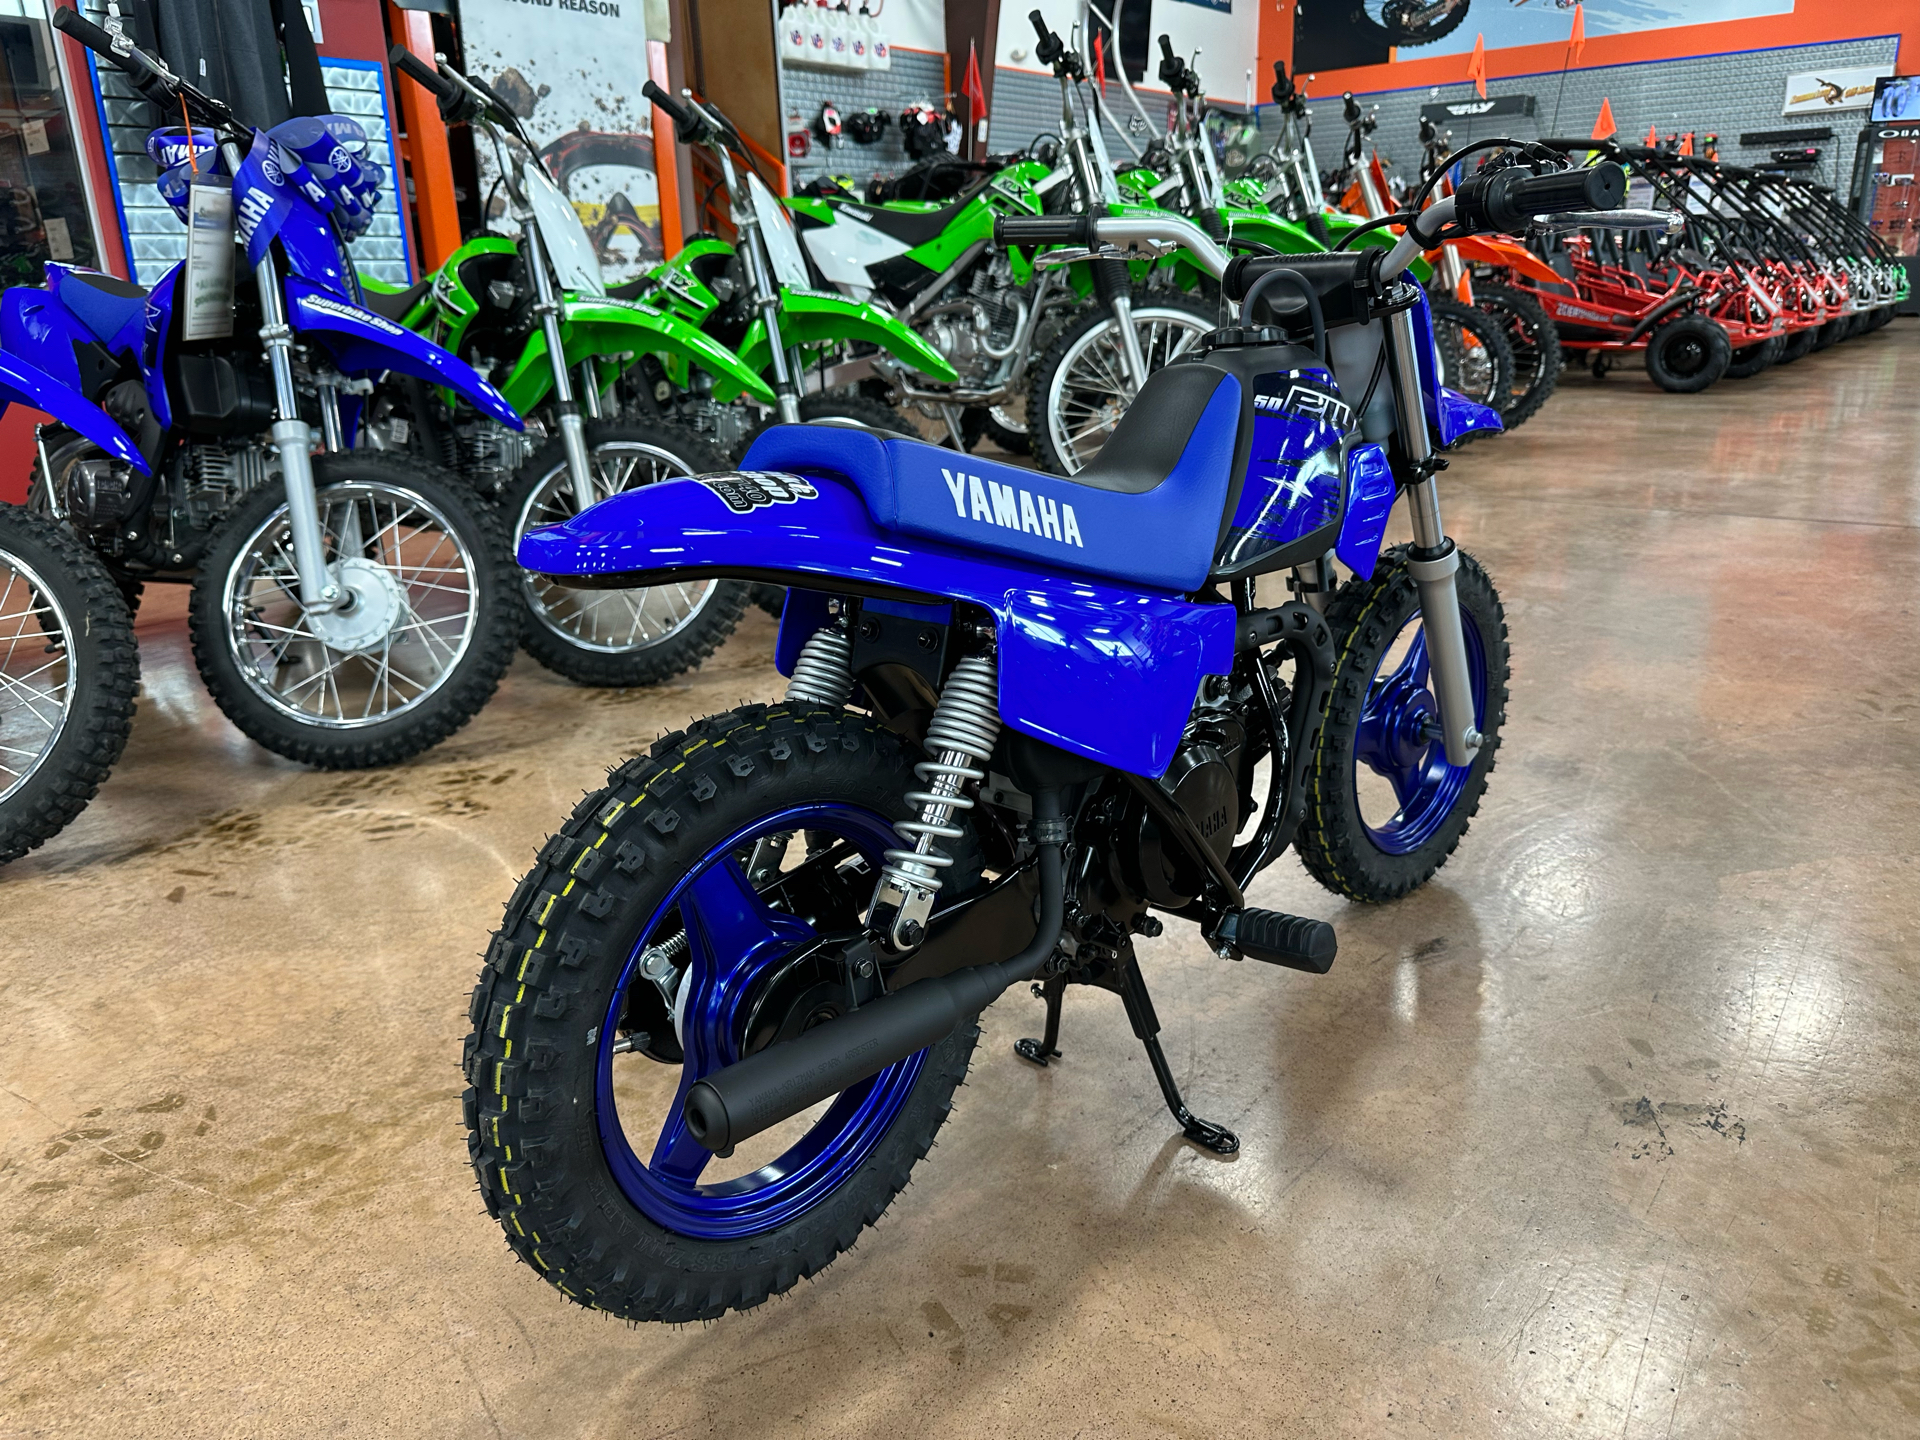 2023 Yamaha PW50 in Evansville, Indiana - Photo 4